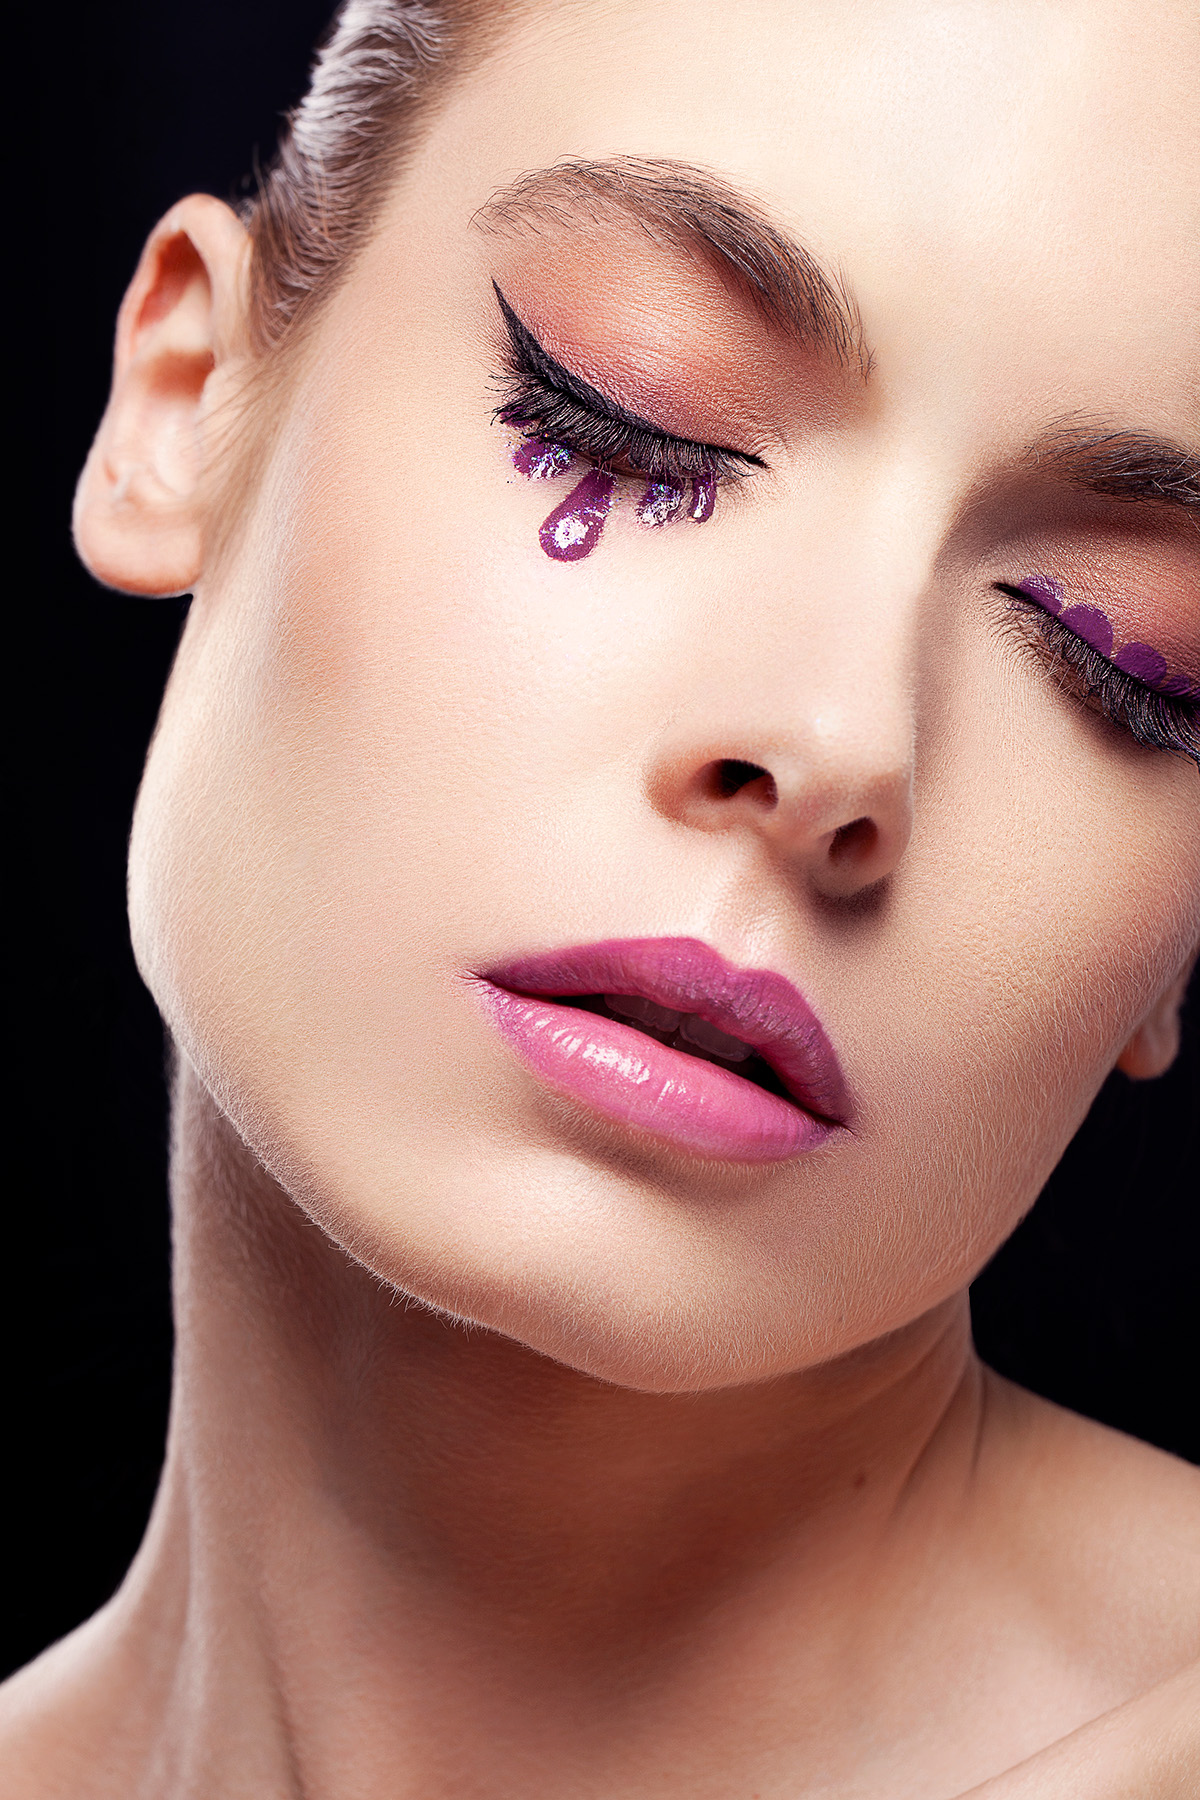 beauty makeup Make Up MUA hair skin portrait closeup girl studio retouch purple color expressive